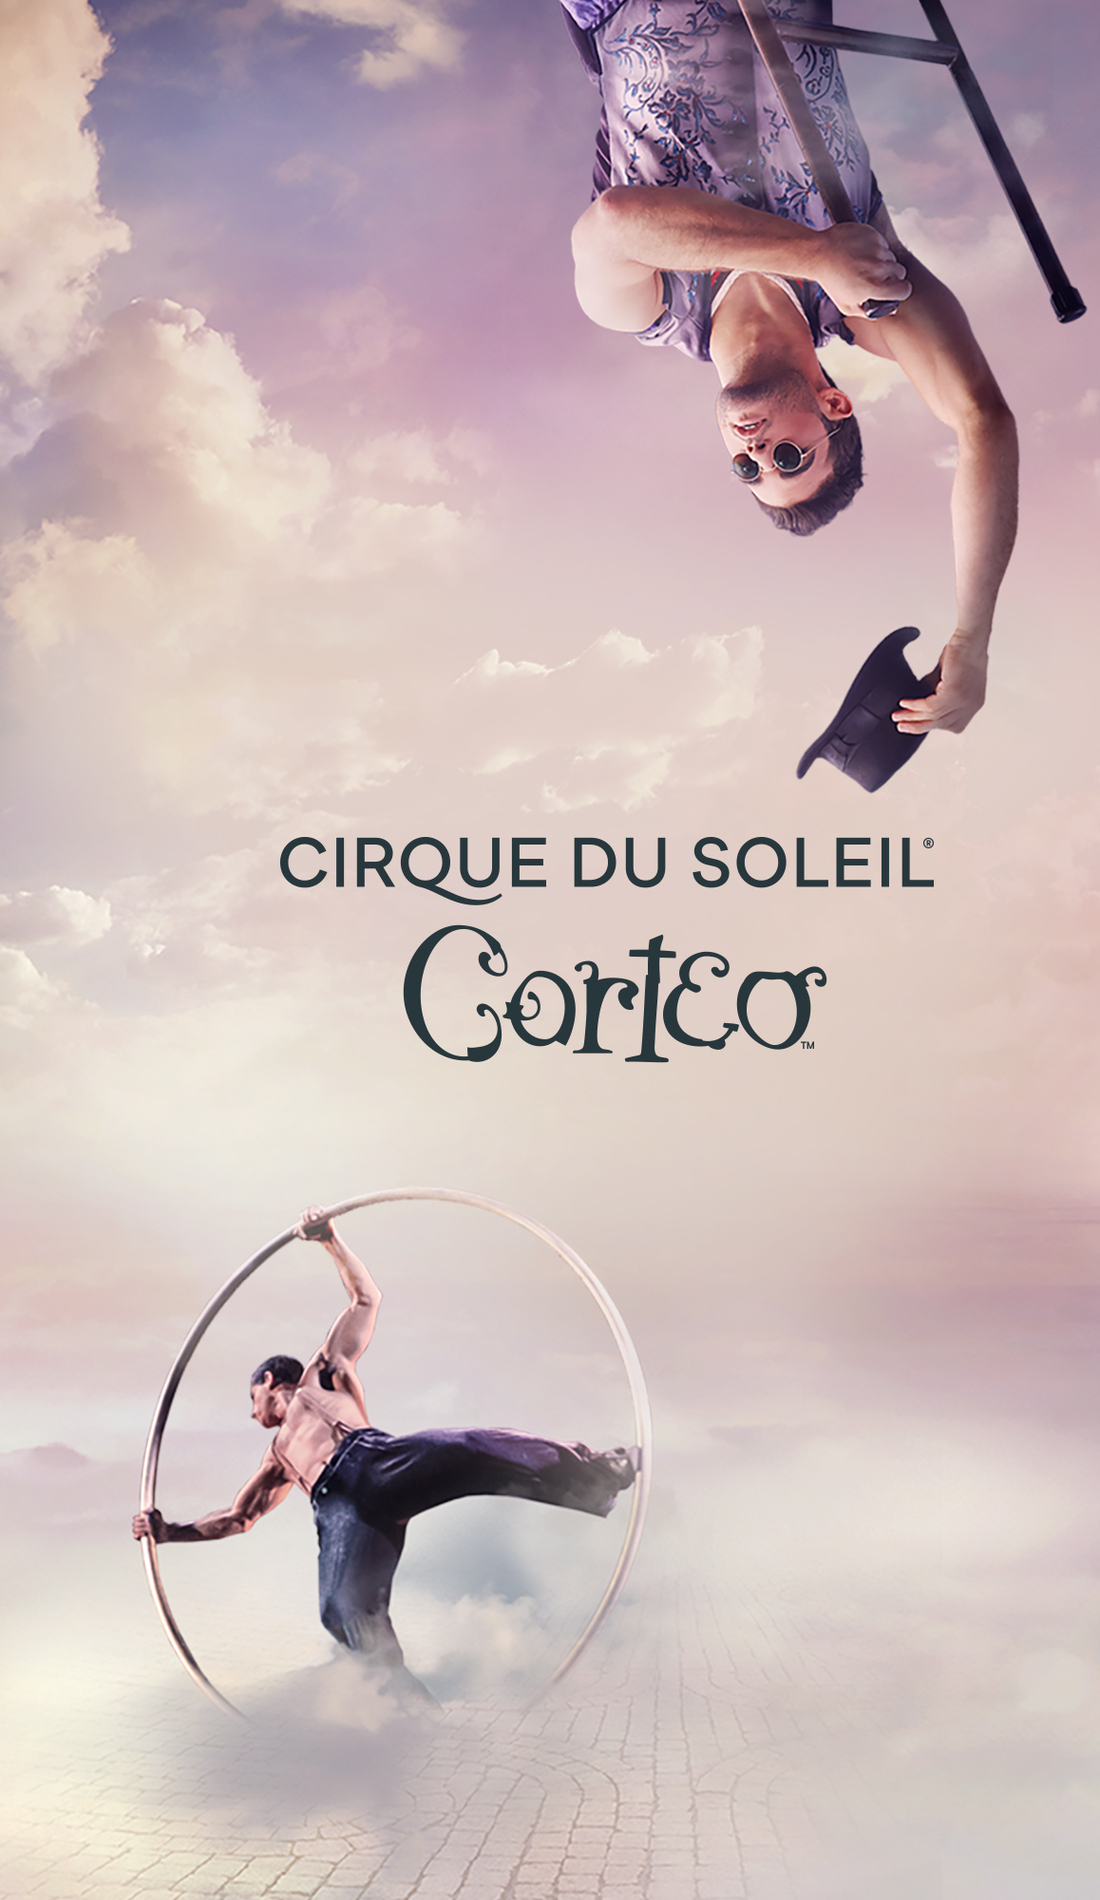 A Cirque du Soleil: Corteo live event